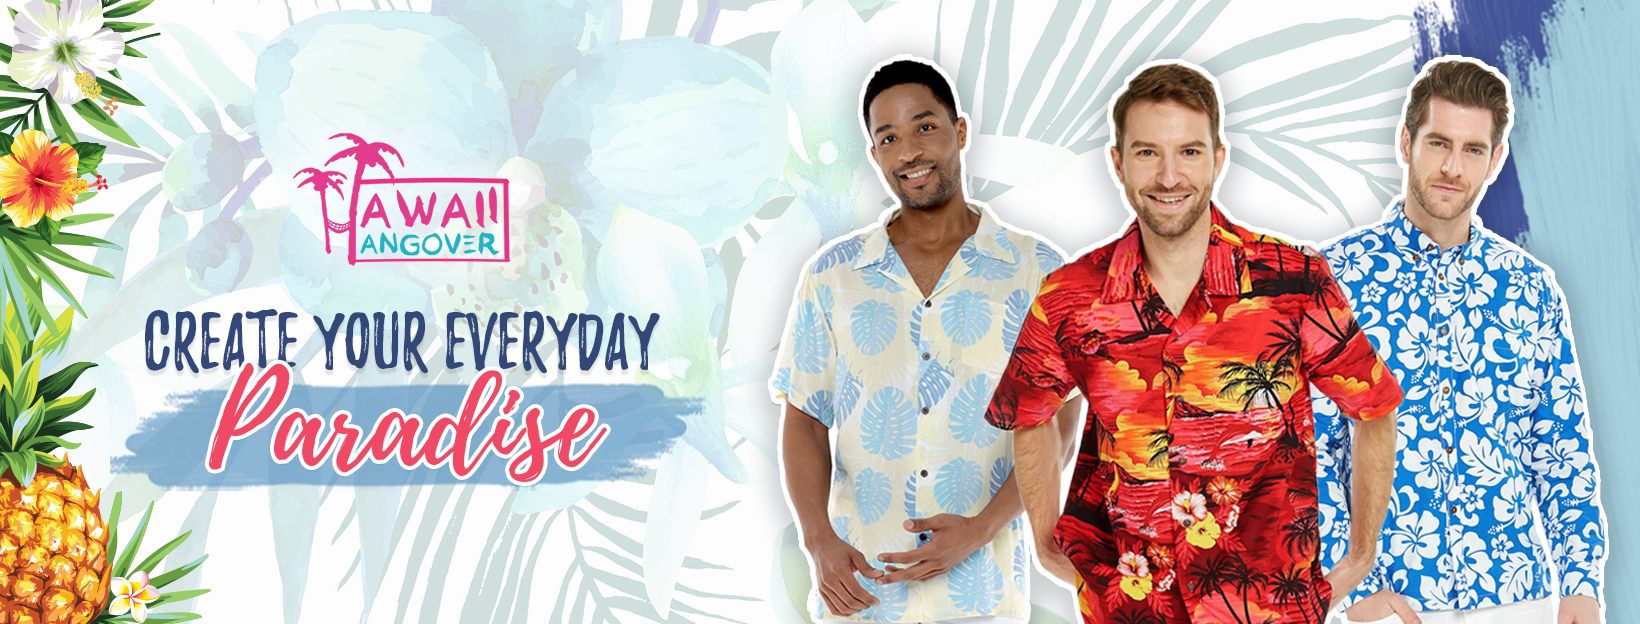 Hibiscus Lei Women's Hawaiian Shirt - Ky's Hawaiian Shirts